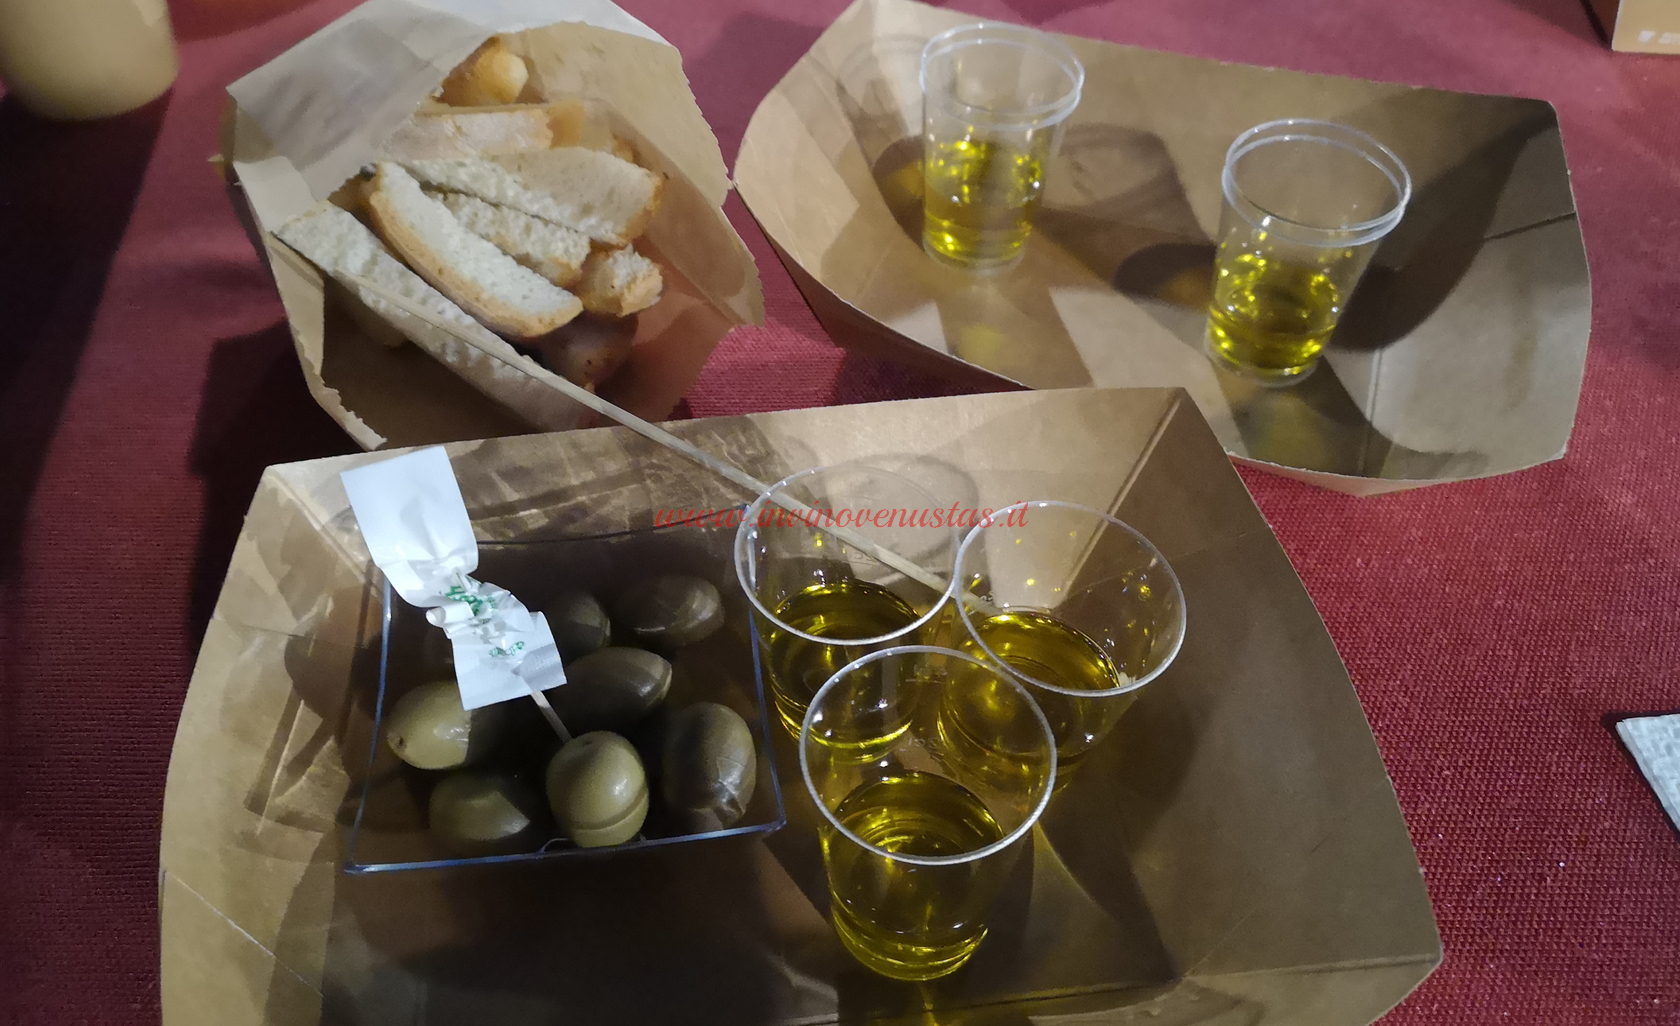 Pane olio e olive Conventino Monteciccardo